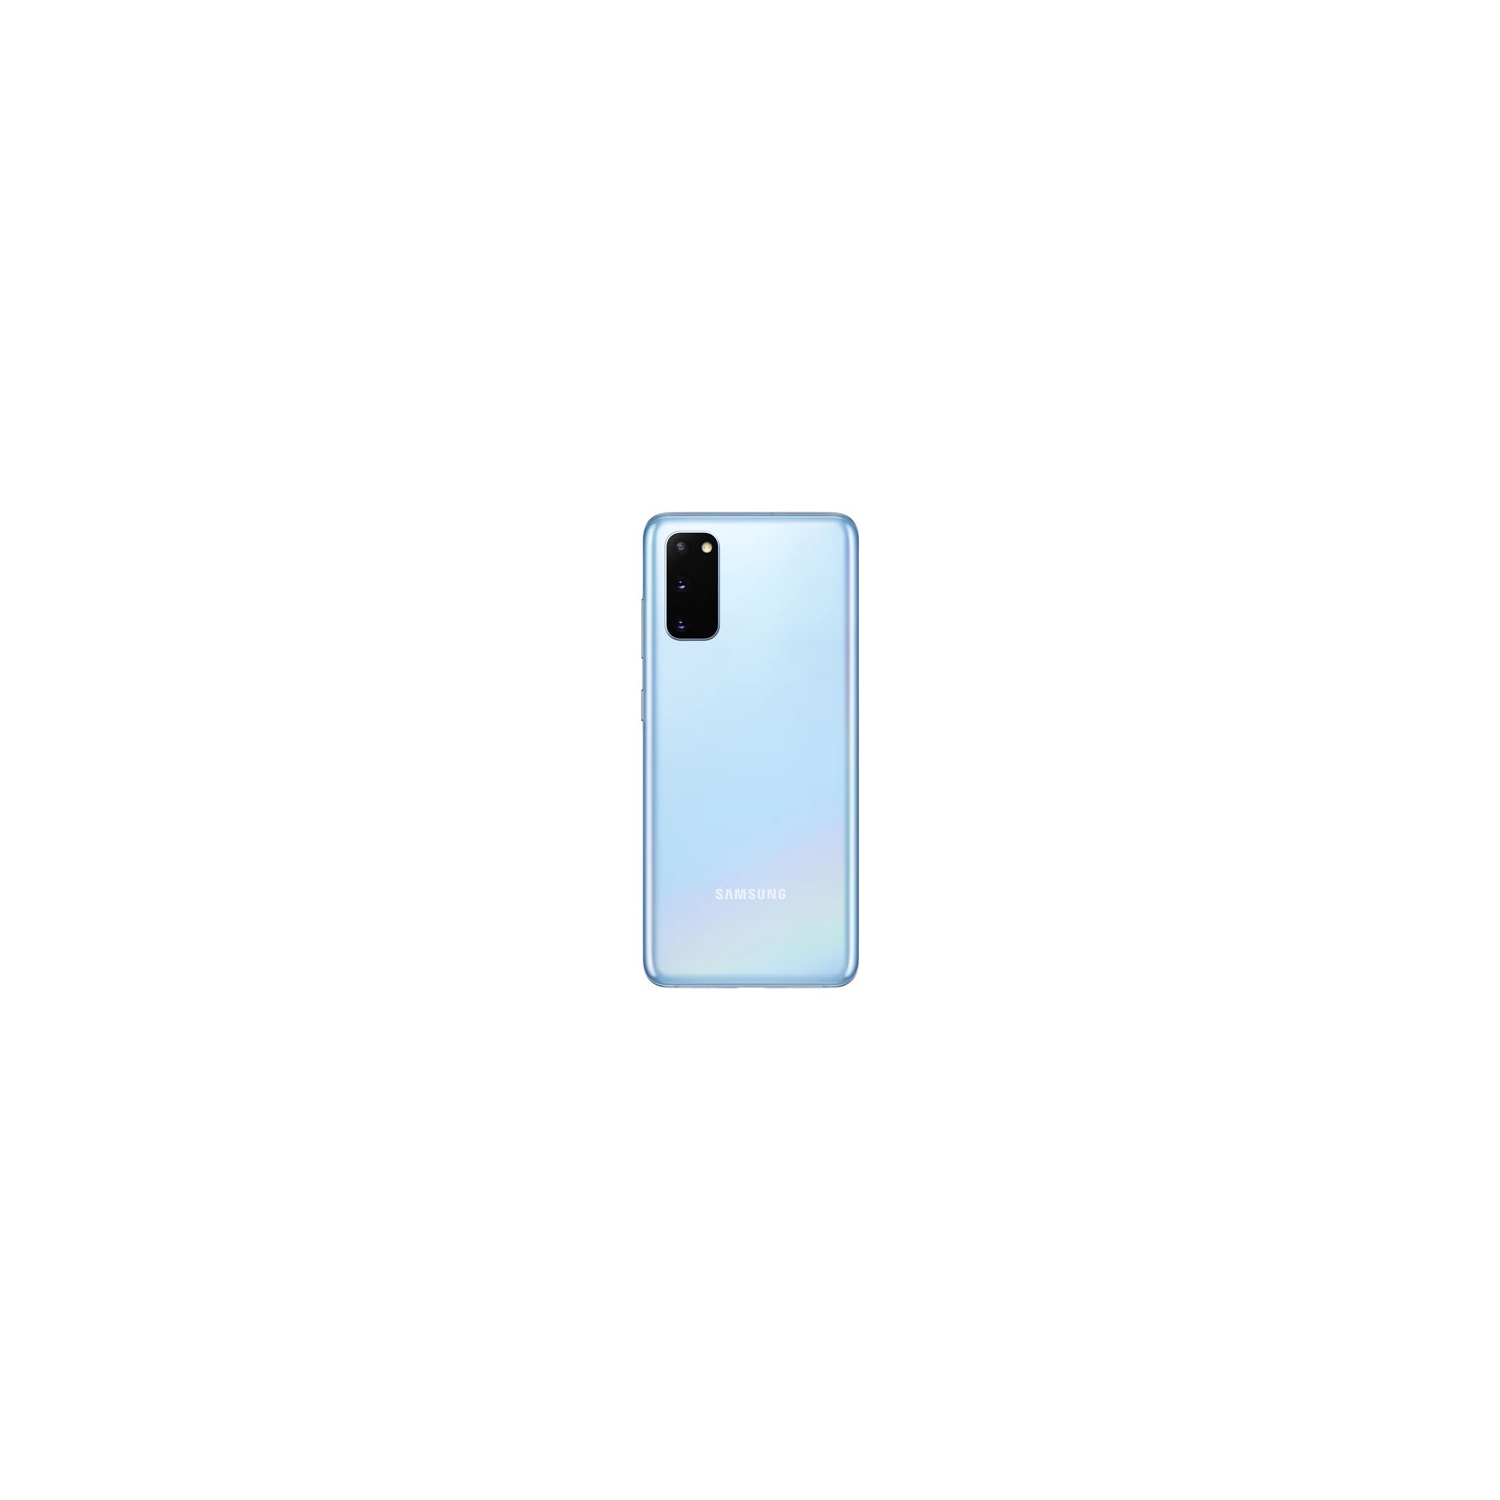 Refurbished (Fair) - Samsung Galaxy S20 5G 128GB Smartphone - Cloud Blue - Unlocked